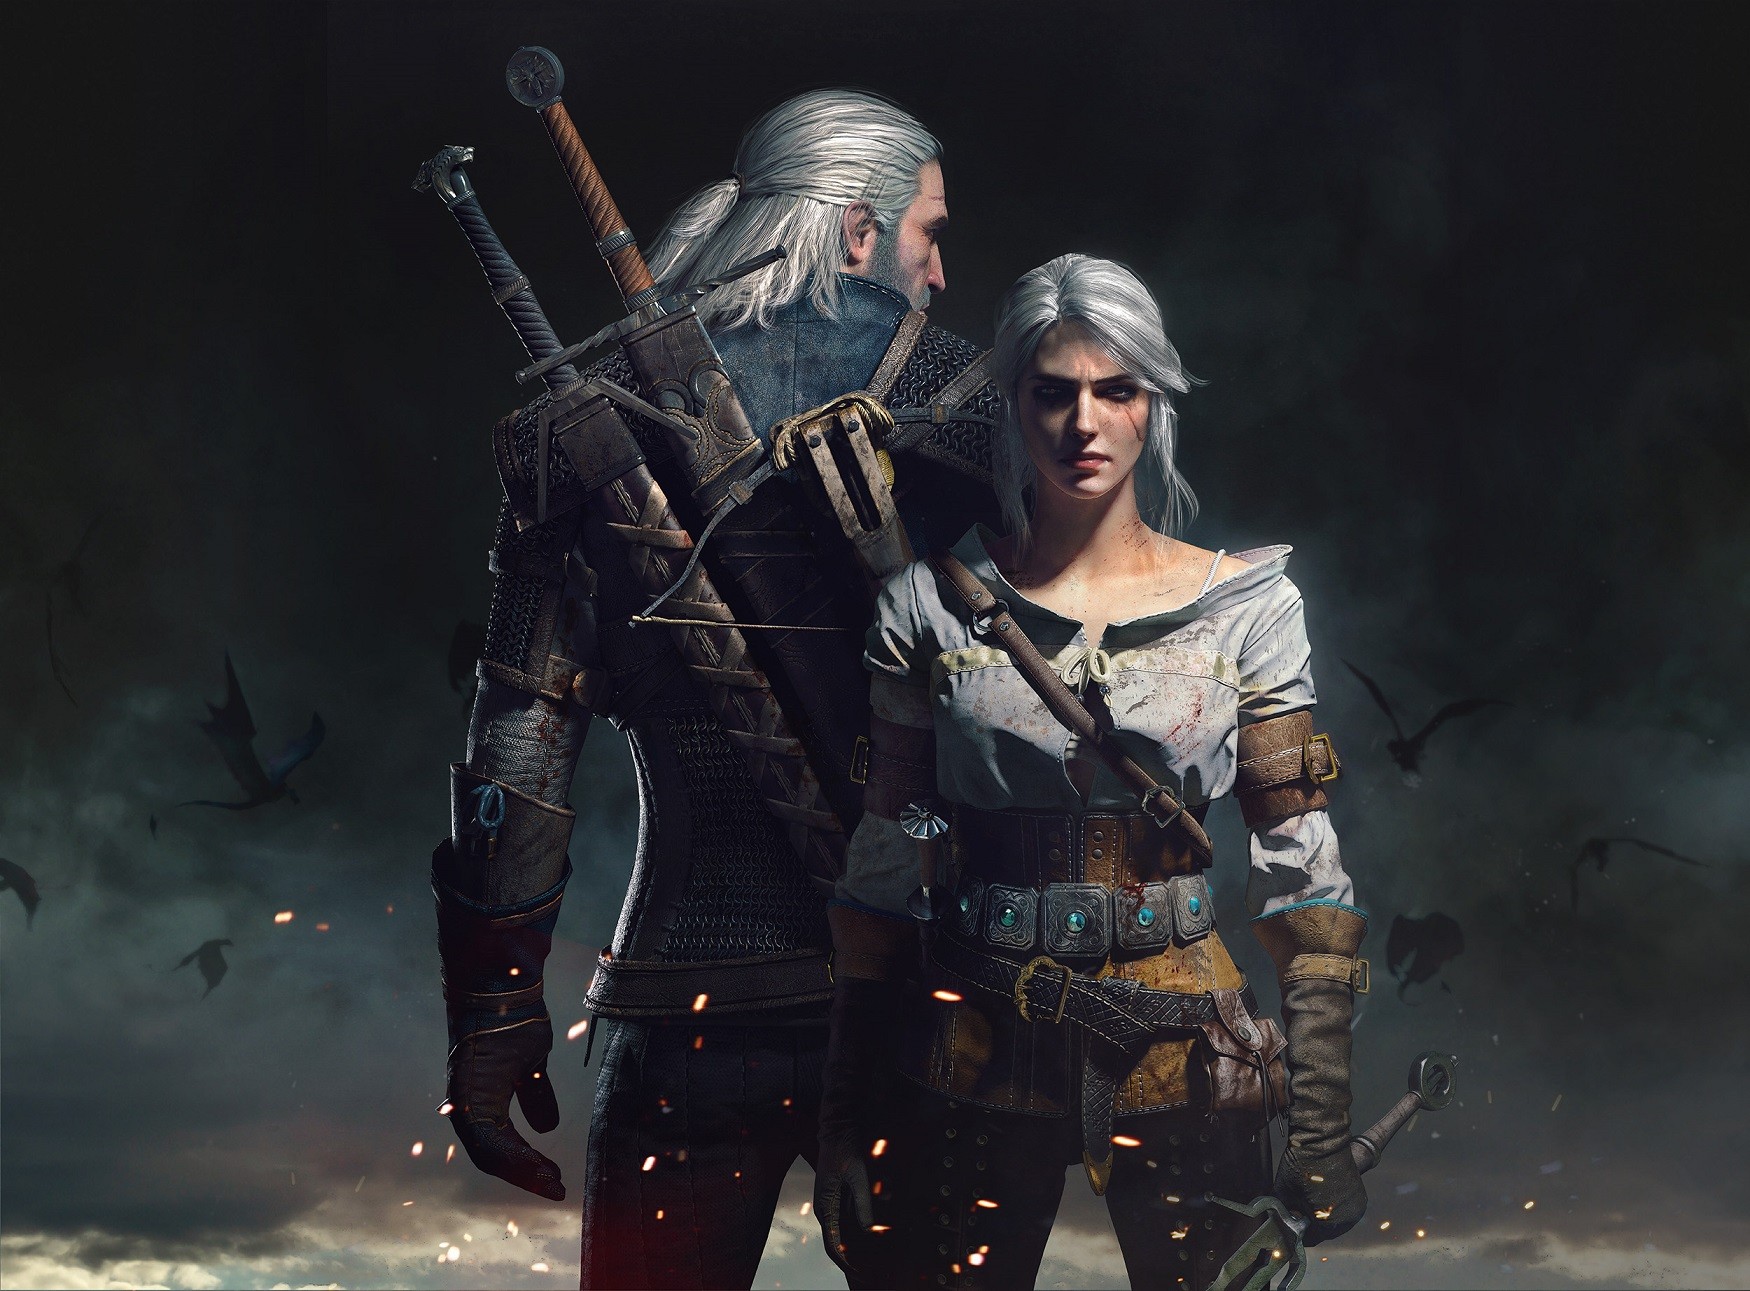 Geralt of Rivia, Cirilla Fiona Elen Riannon, Ciri Wallpaper